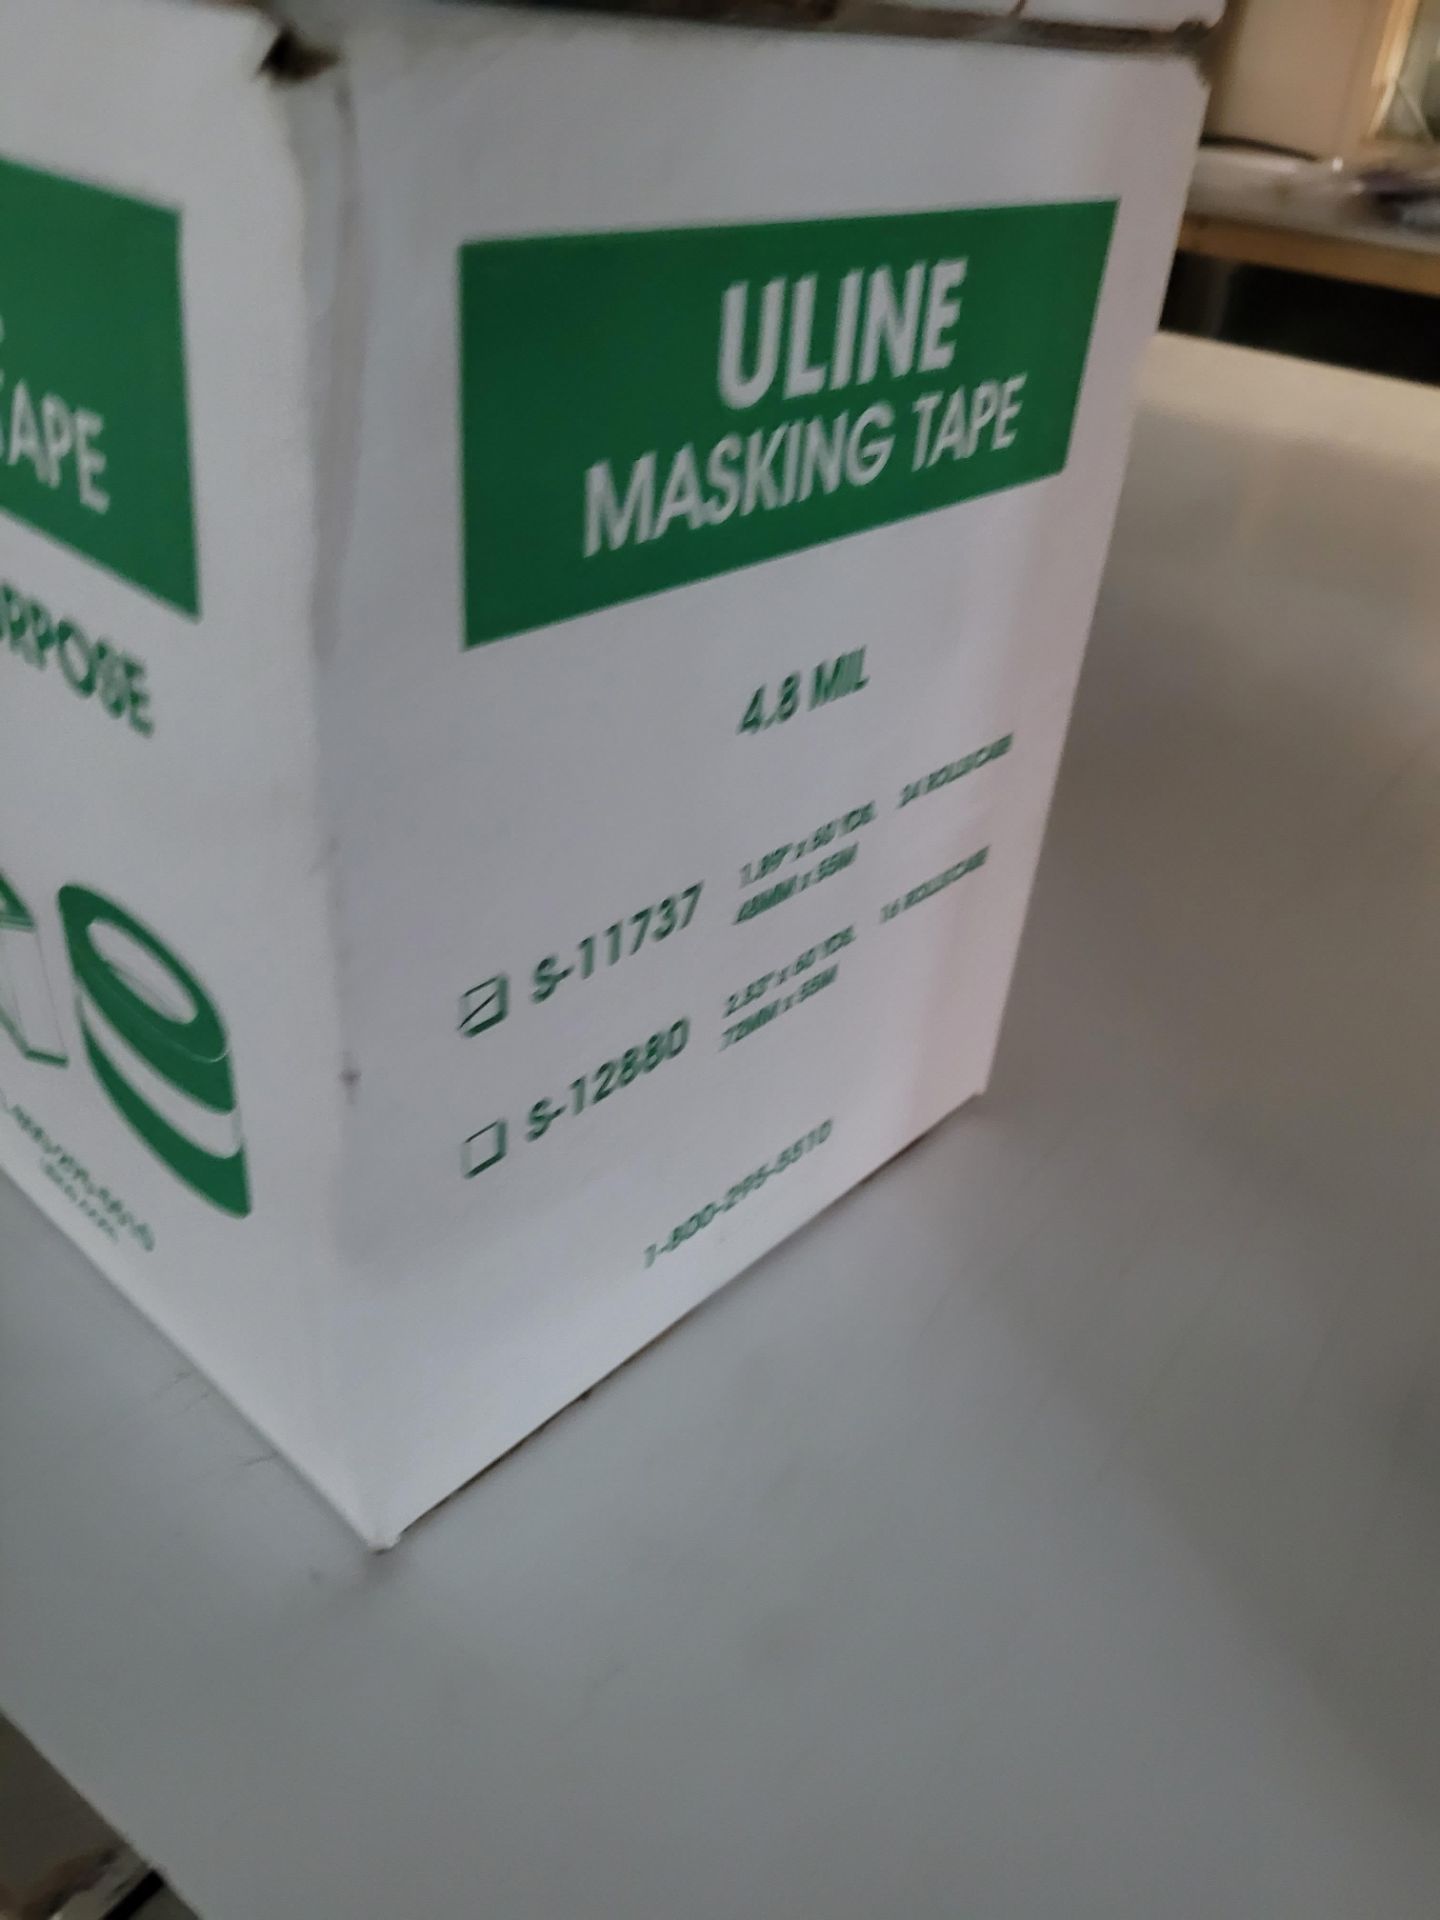 (2) Cases of ULINE mod. S11737 4.8mil masking tape - Image 4 of 4